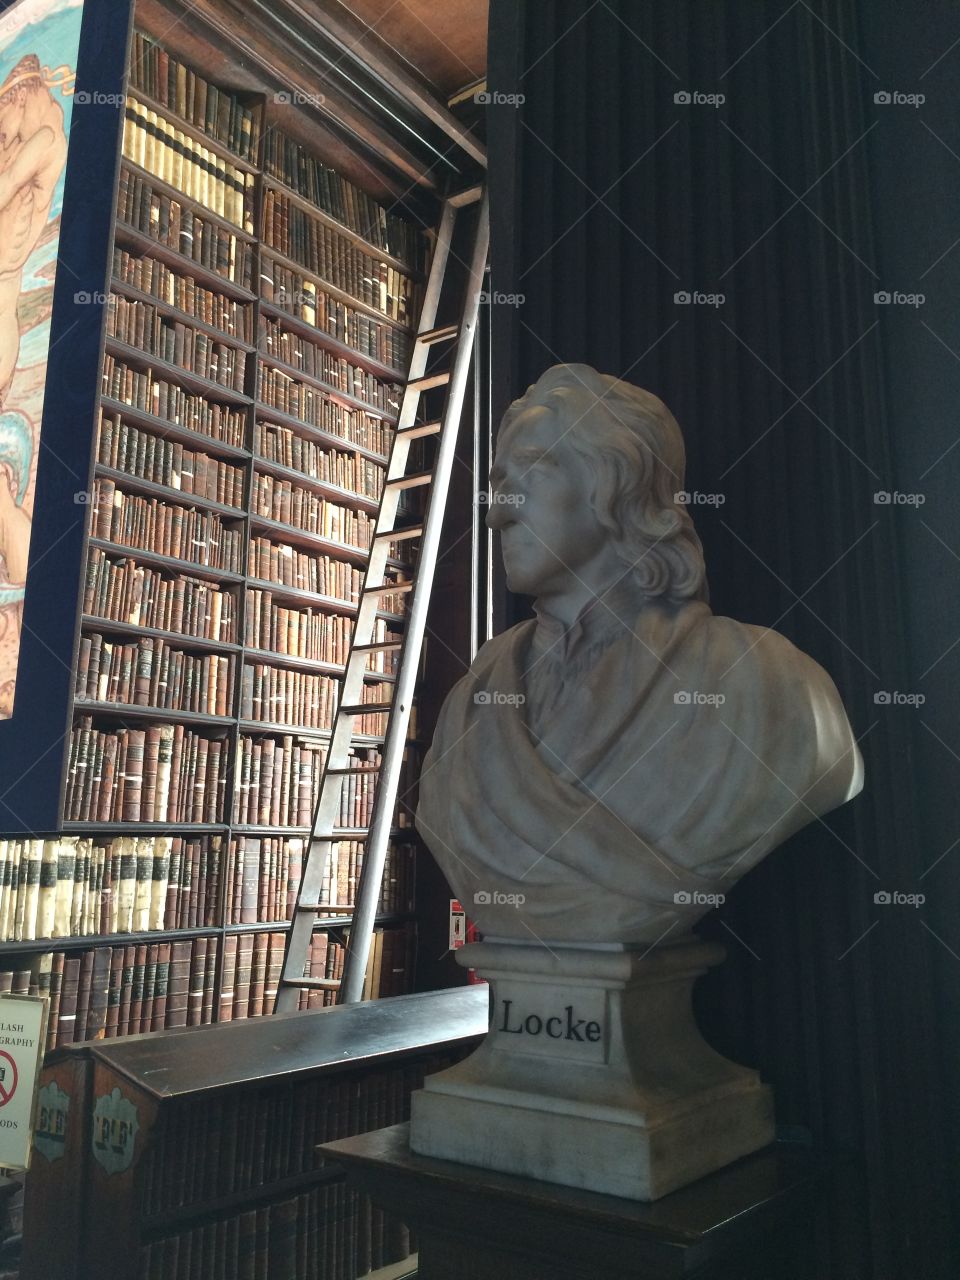 trinity College Dublin ireland, John Locke with old books